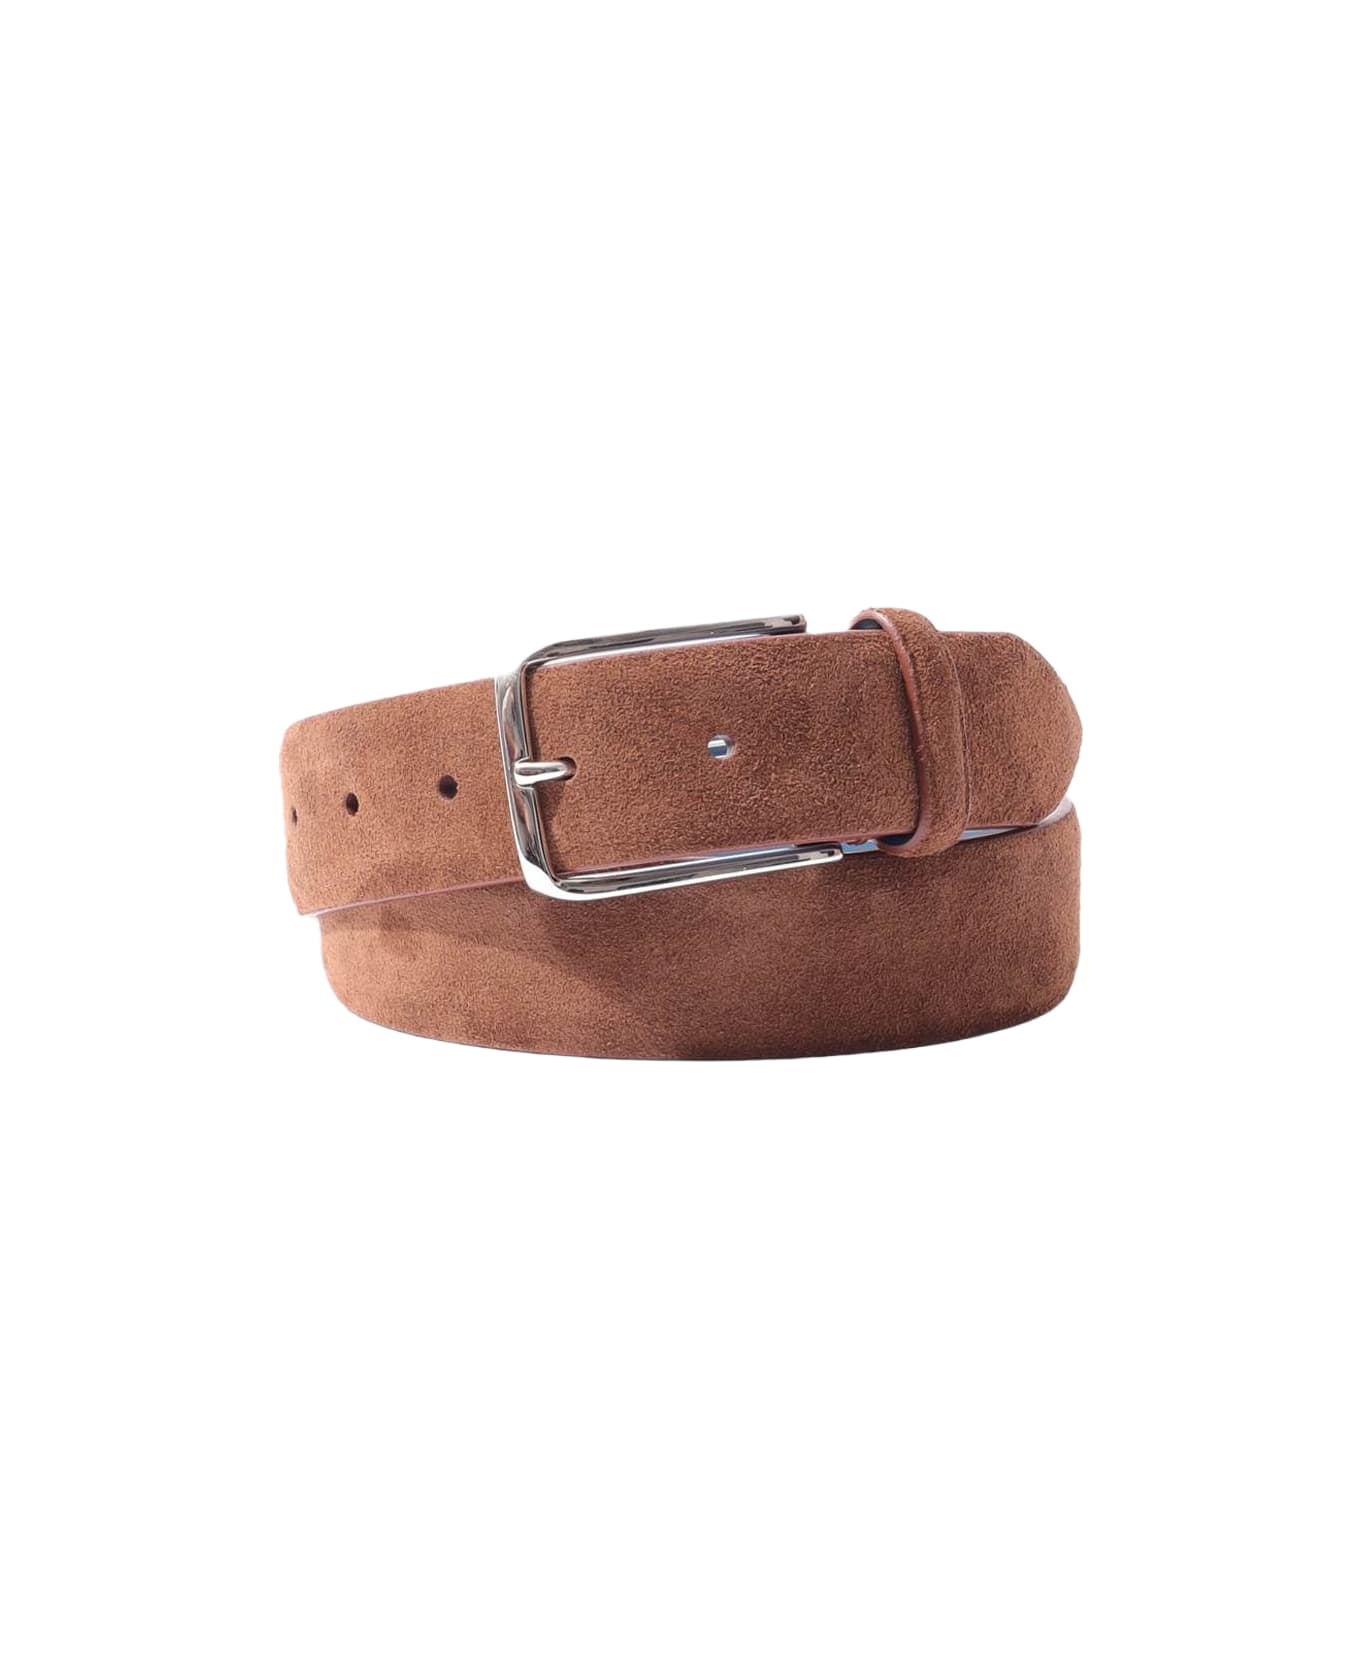 Larusmiani Suede Leather Belt Belt - Brown